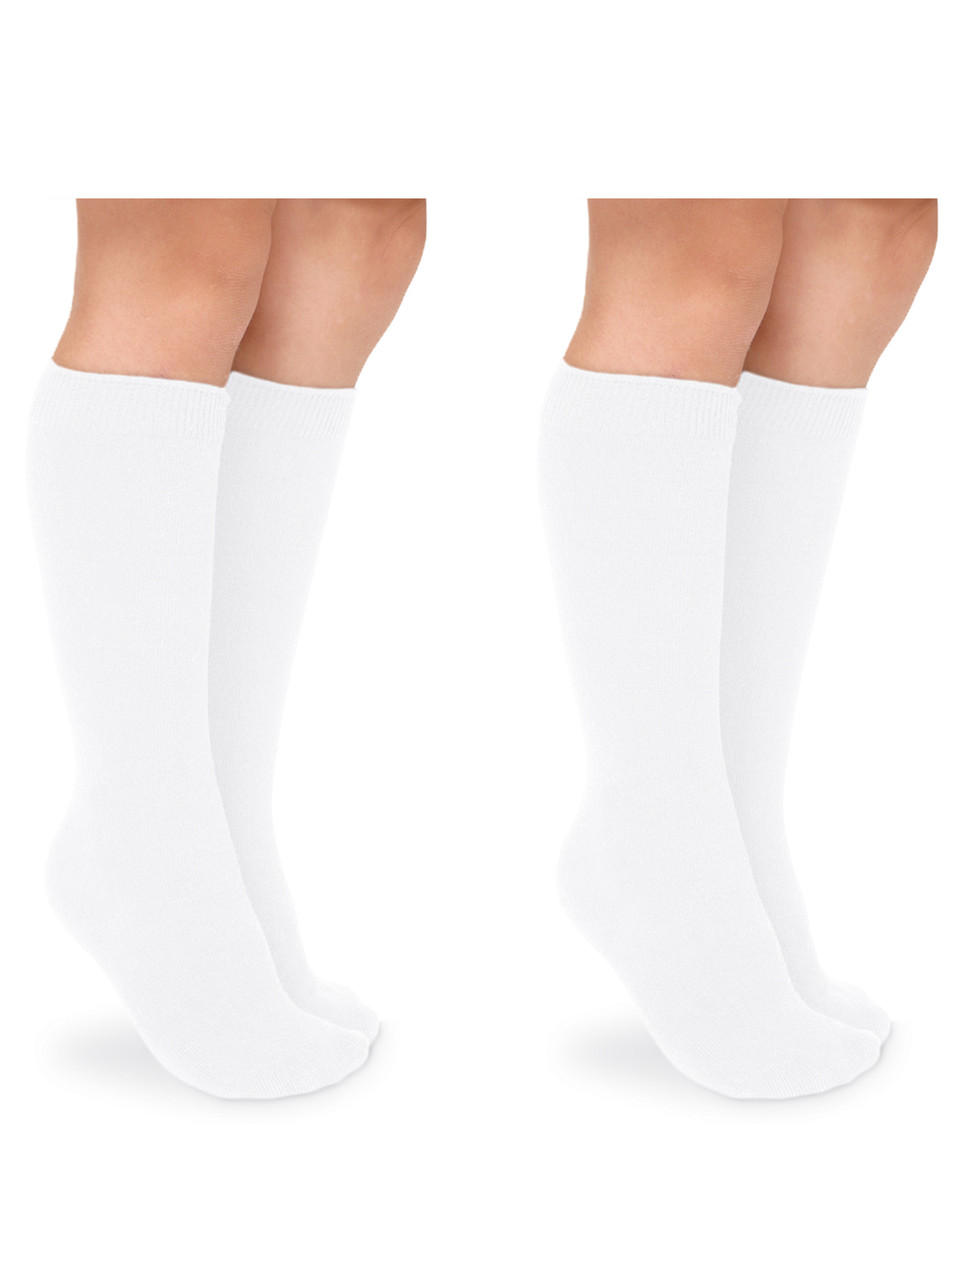 Jefferies Socks Girls Classic Cotton Tights 2 Pair Pack